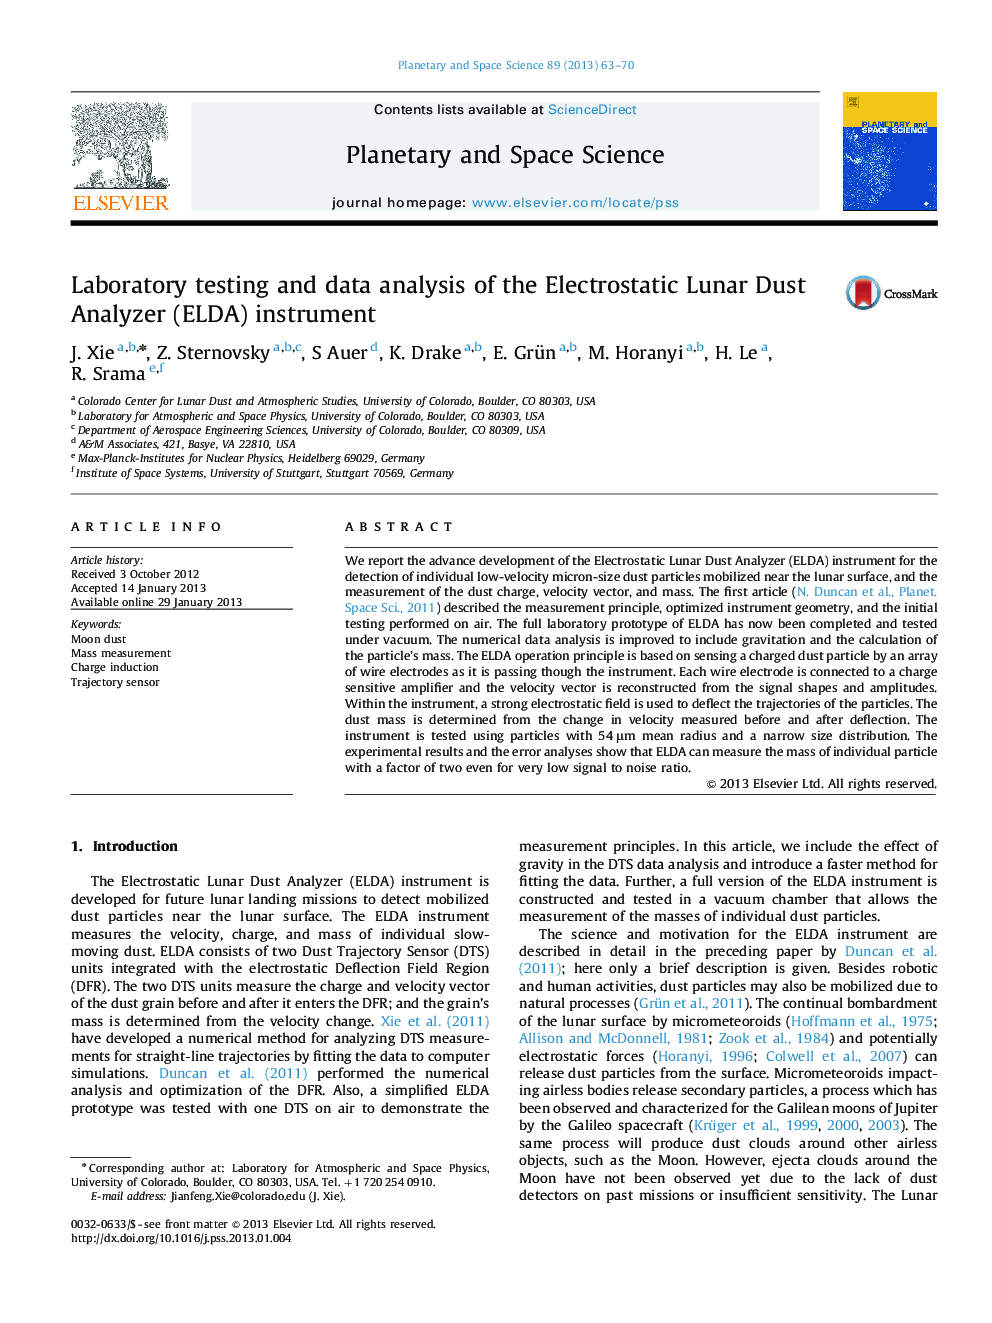 Laboratory testing and data analysis of the Electrostatic Lunar Dust Analyzer (ELDA) instrument